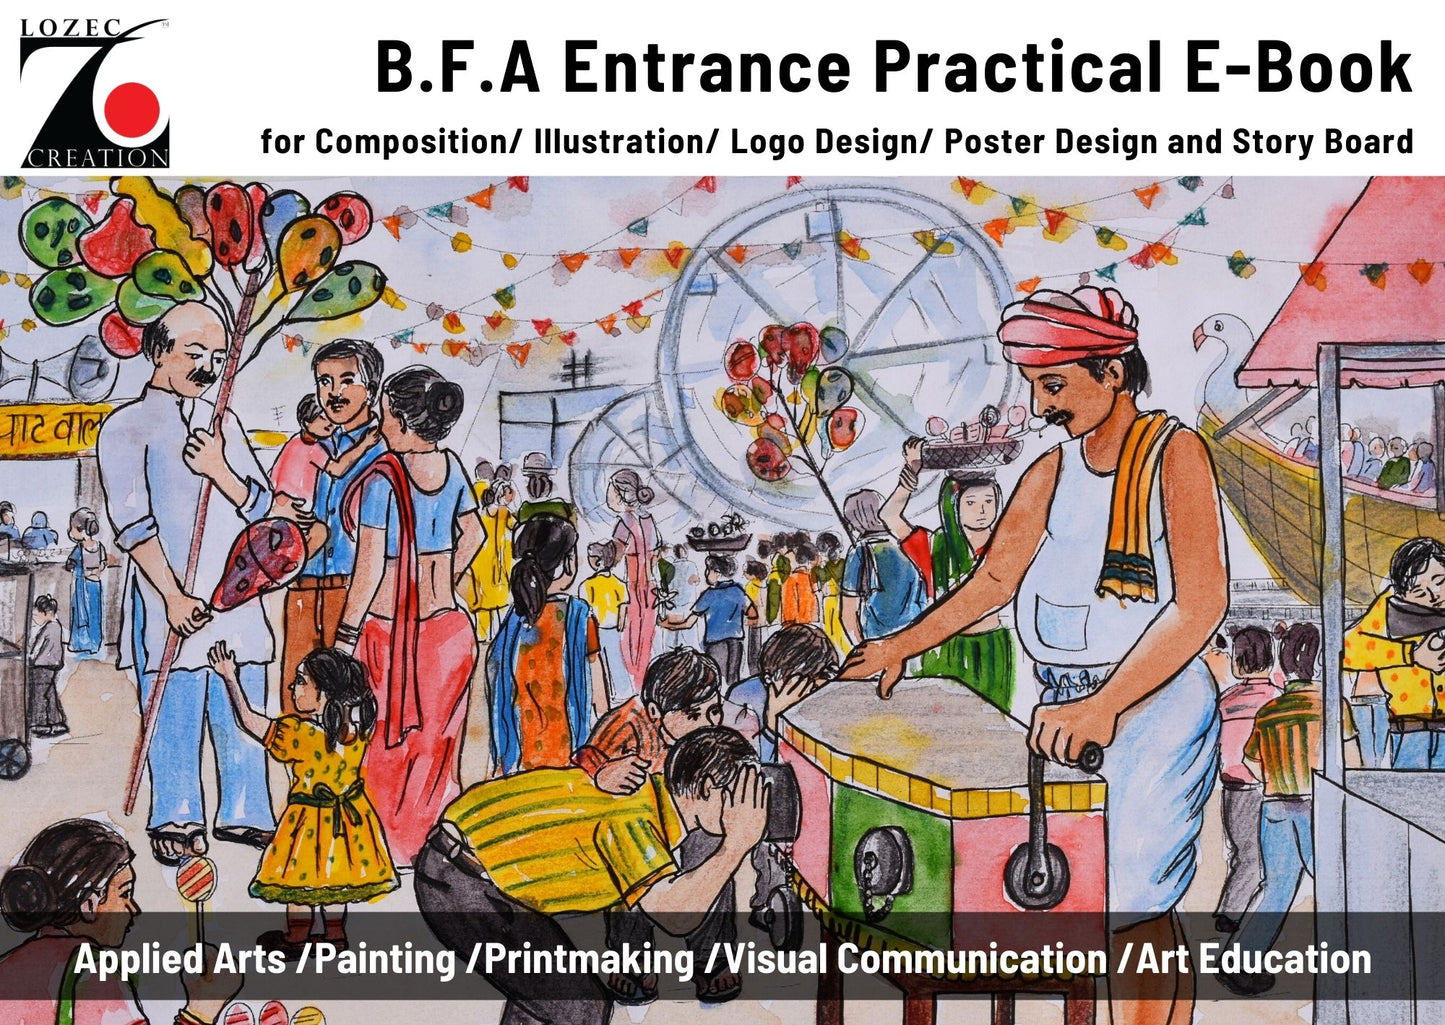 BFA entrance practical practice EBook